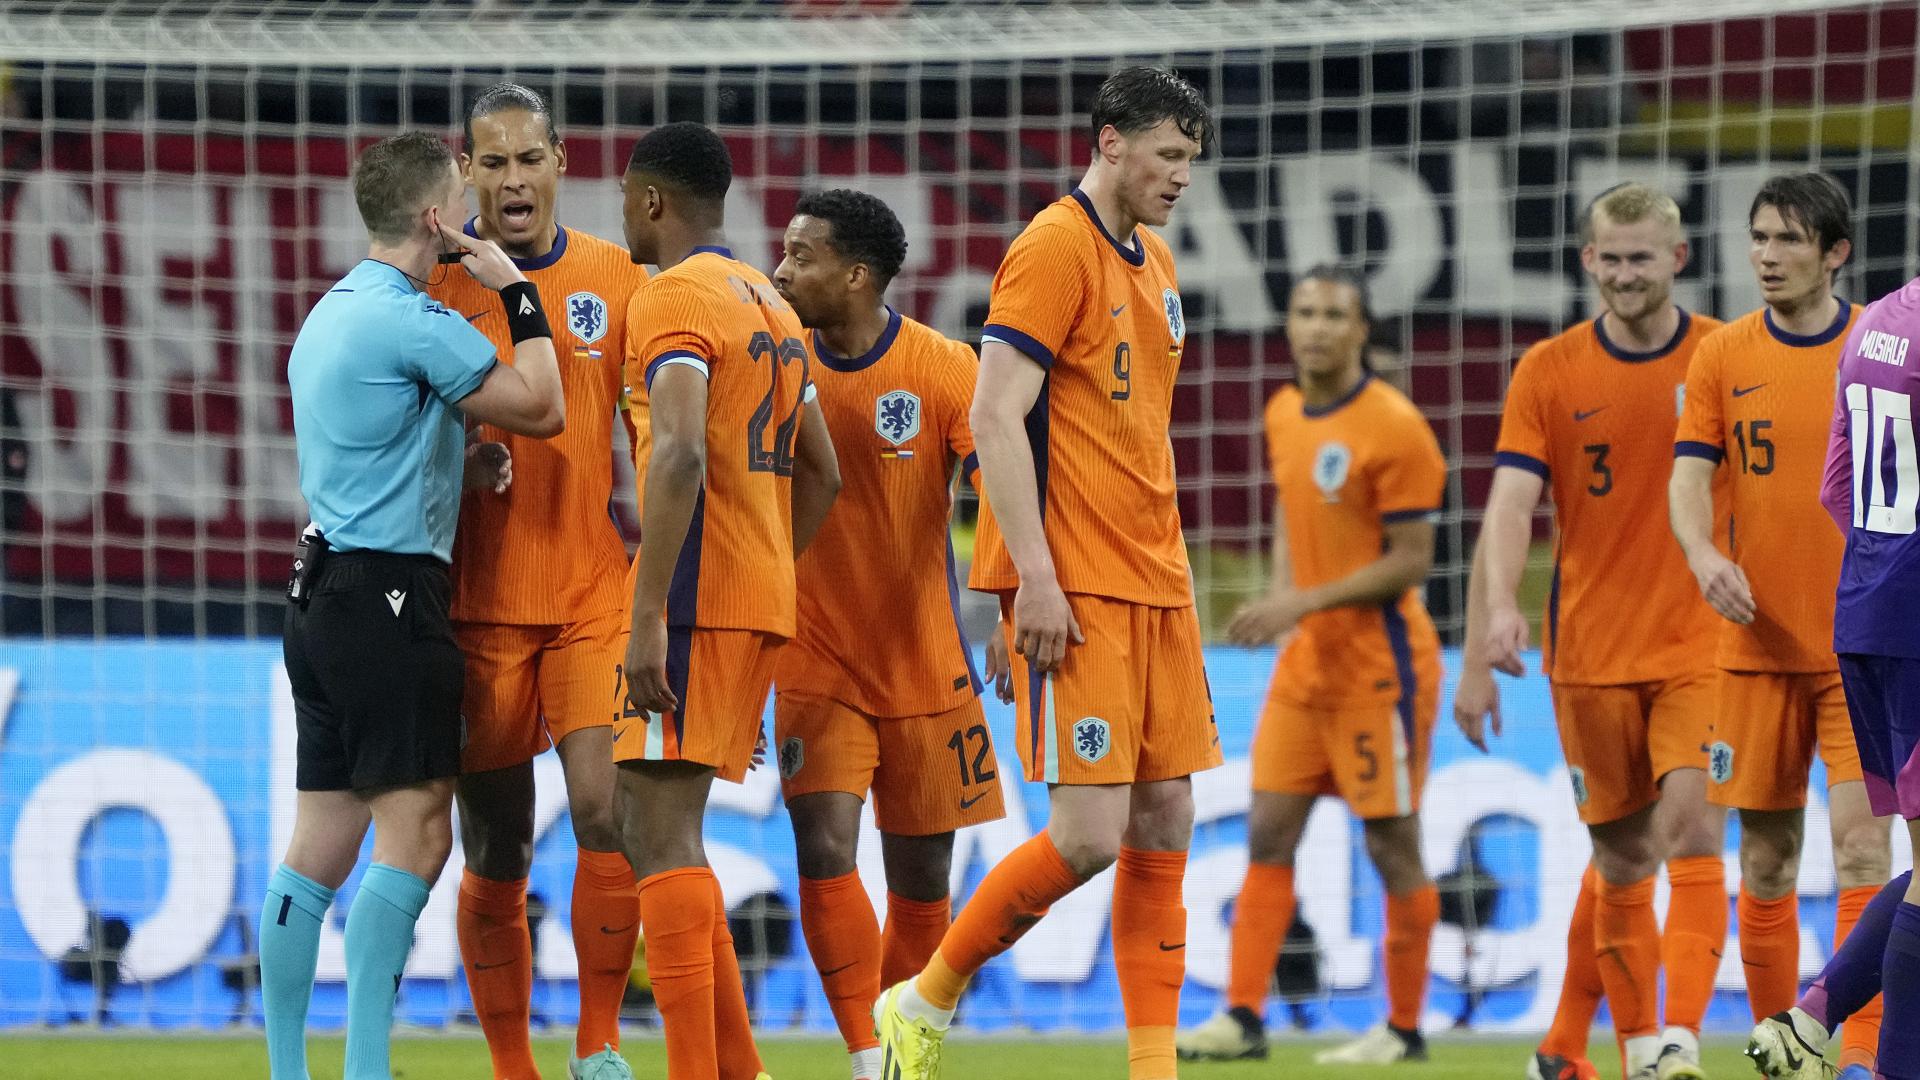 Oranje in slotfase onderuit tegen Duitsland